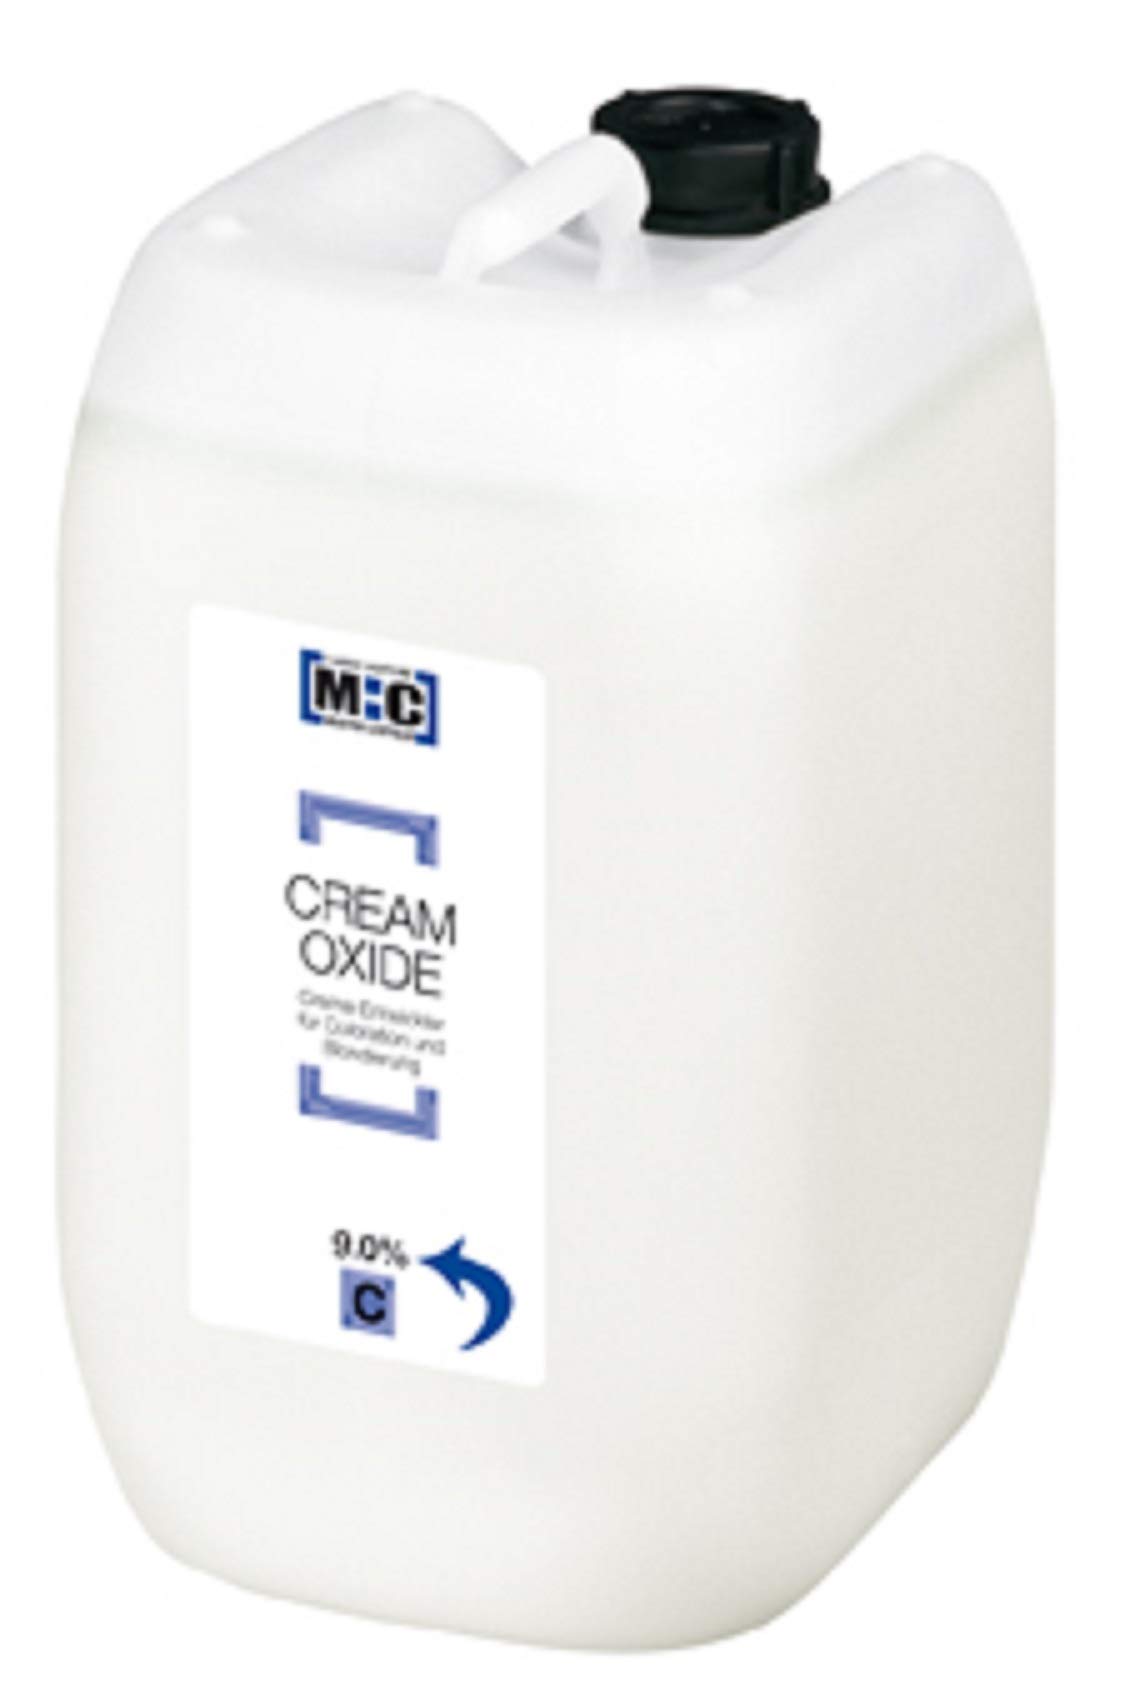 Comair M:C Cream Oxide 9% 5000 ml Creme-Entwickler